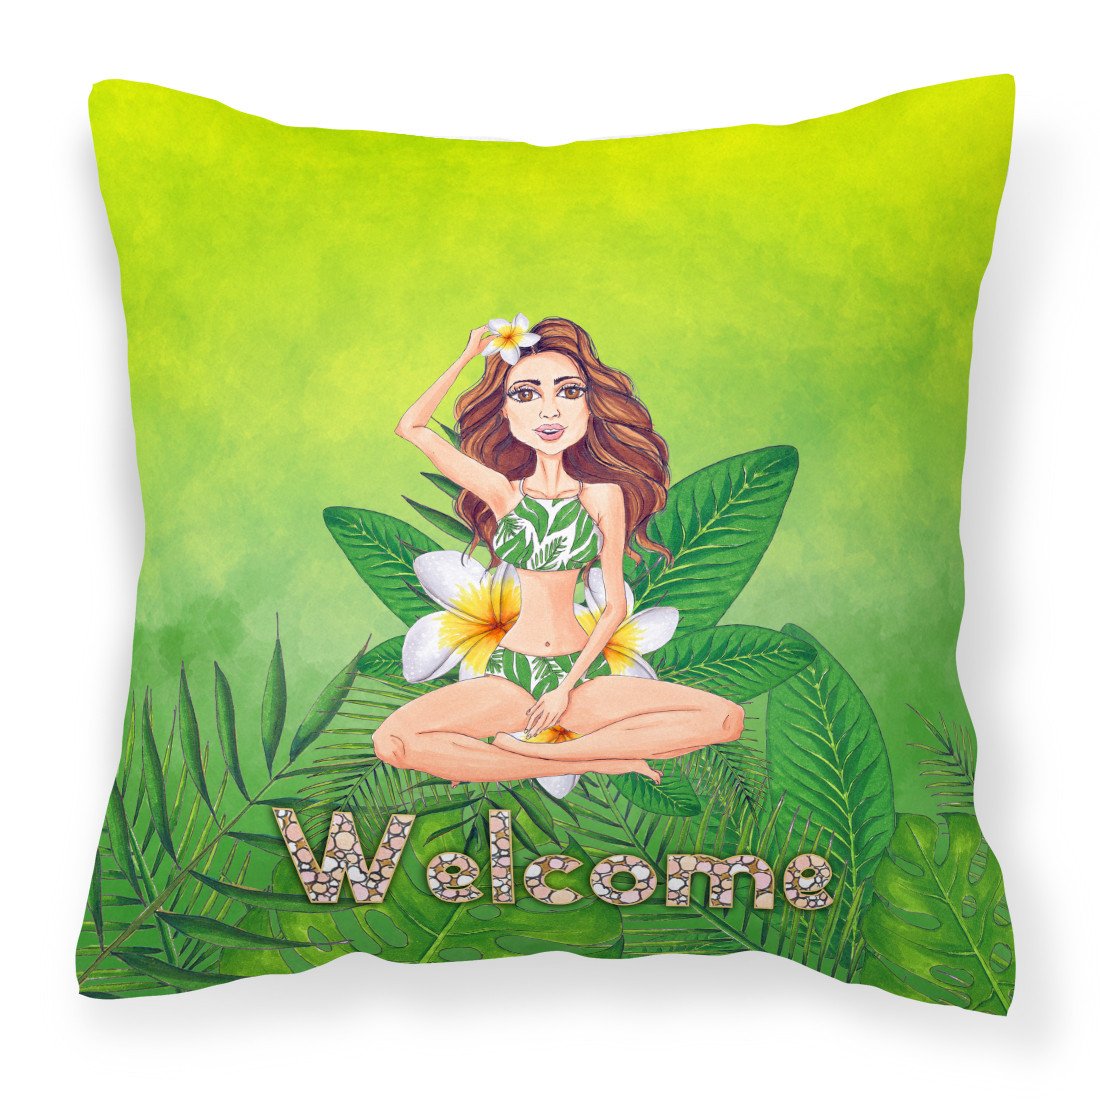 Welcome Lady in Bikini Summer Fabric Decorative Pillow BB7457PW1818 by Caroline's Treasures